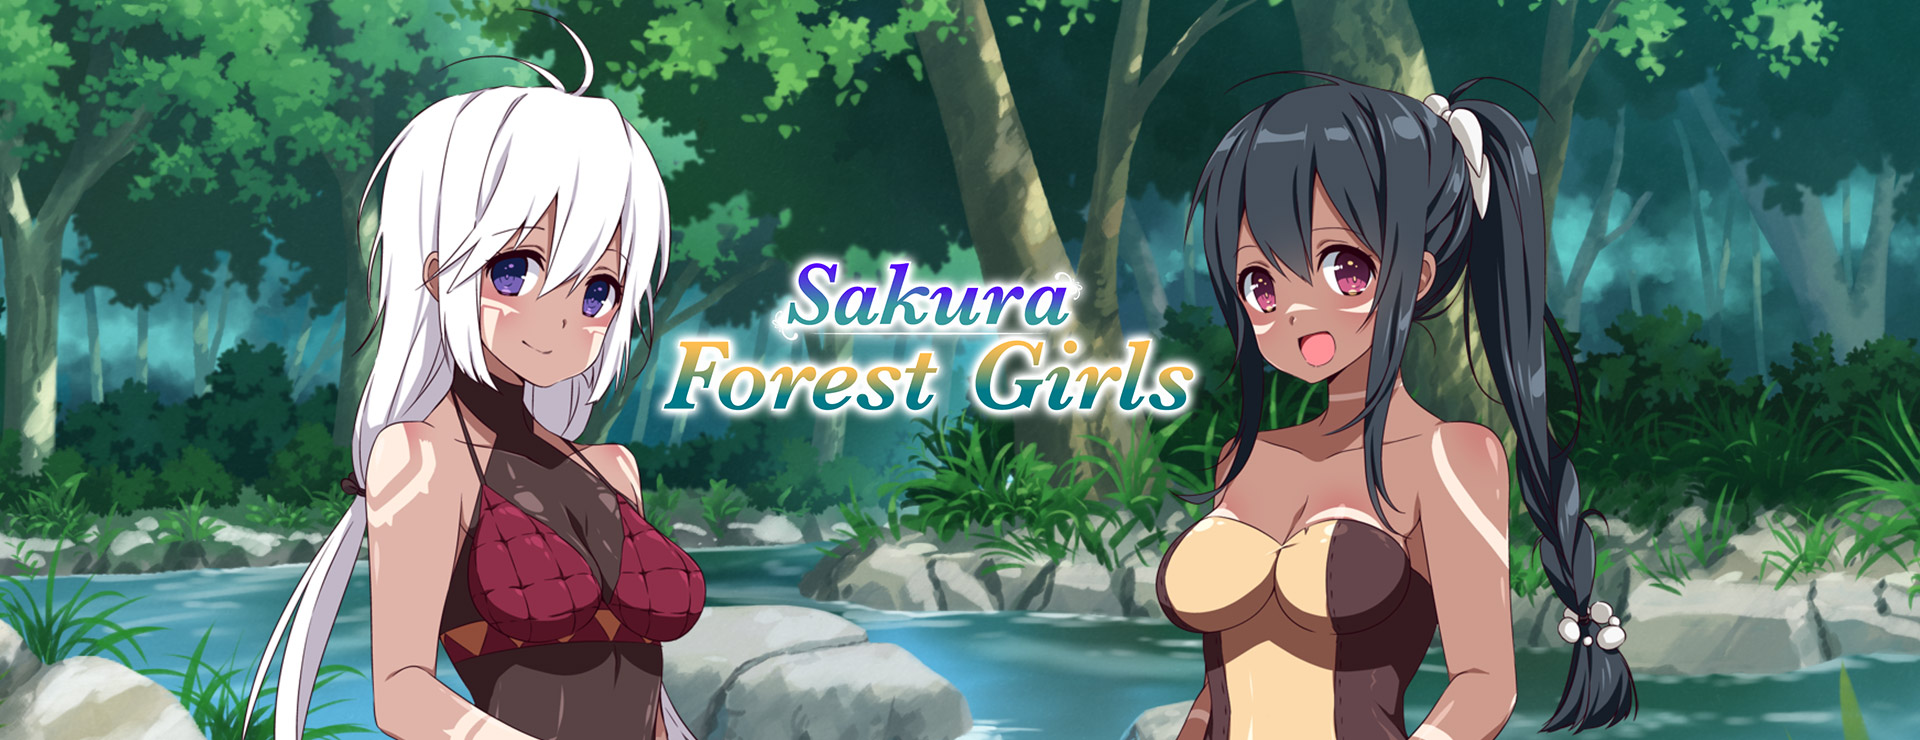 Sakura Forest Girls - Novela Visual Juego